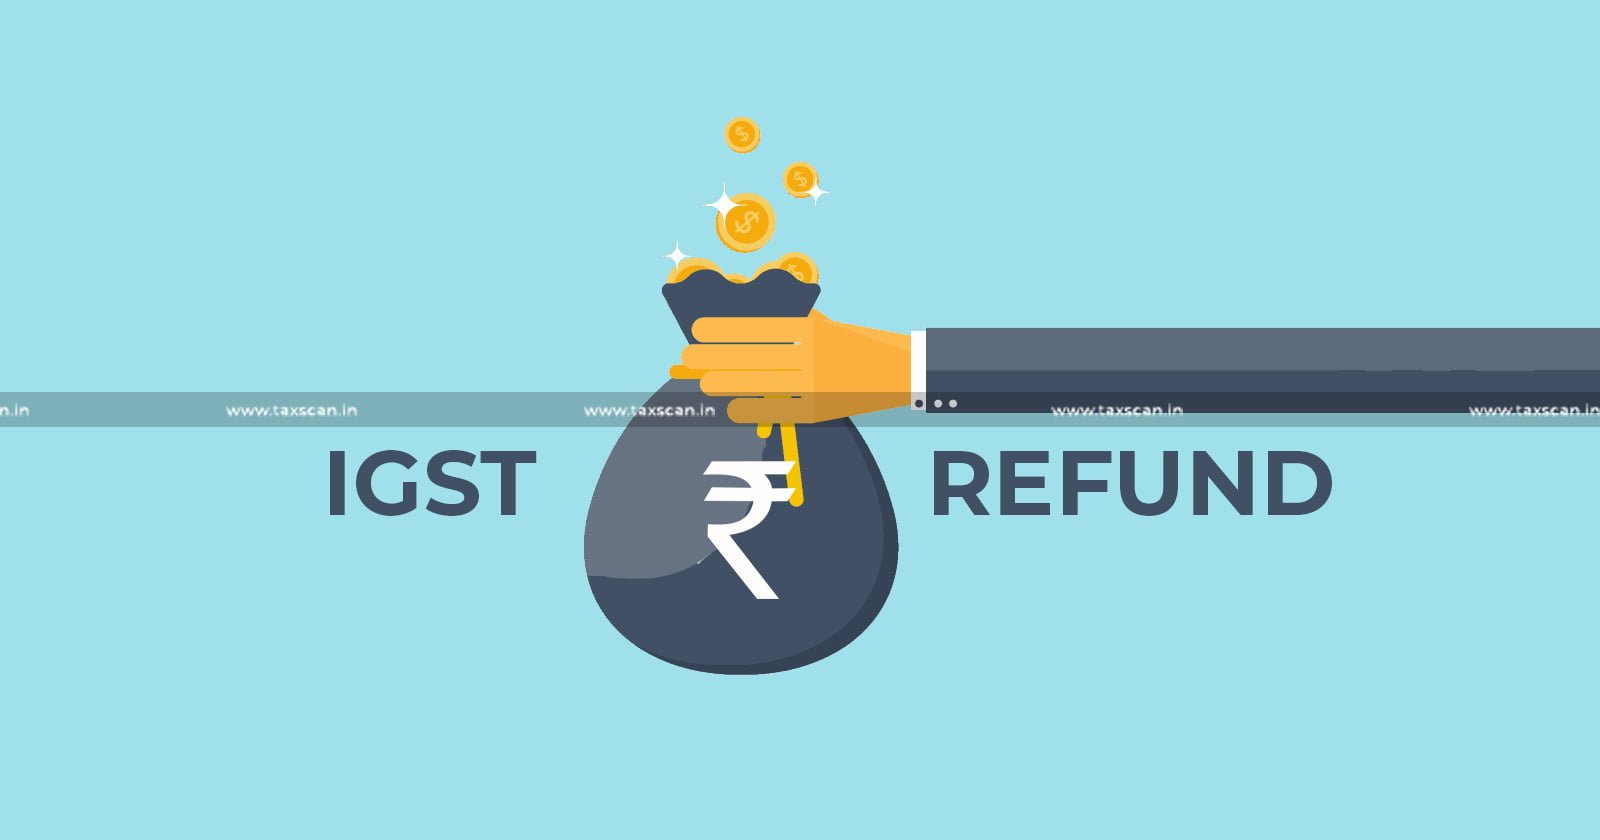 Refund - IGST - Zero Rated Supply - Bombay High Court - Supply - Interest - Refund of IGST - Refund of IGST Allowable - taxscan